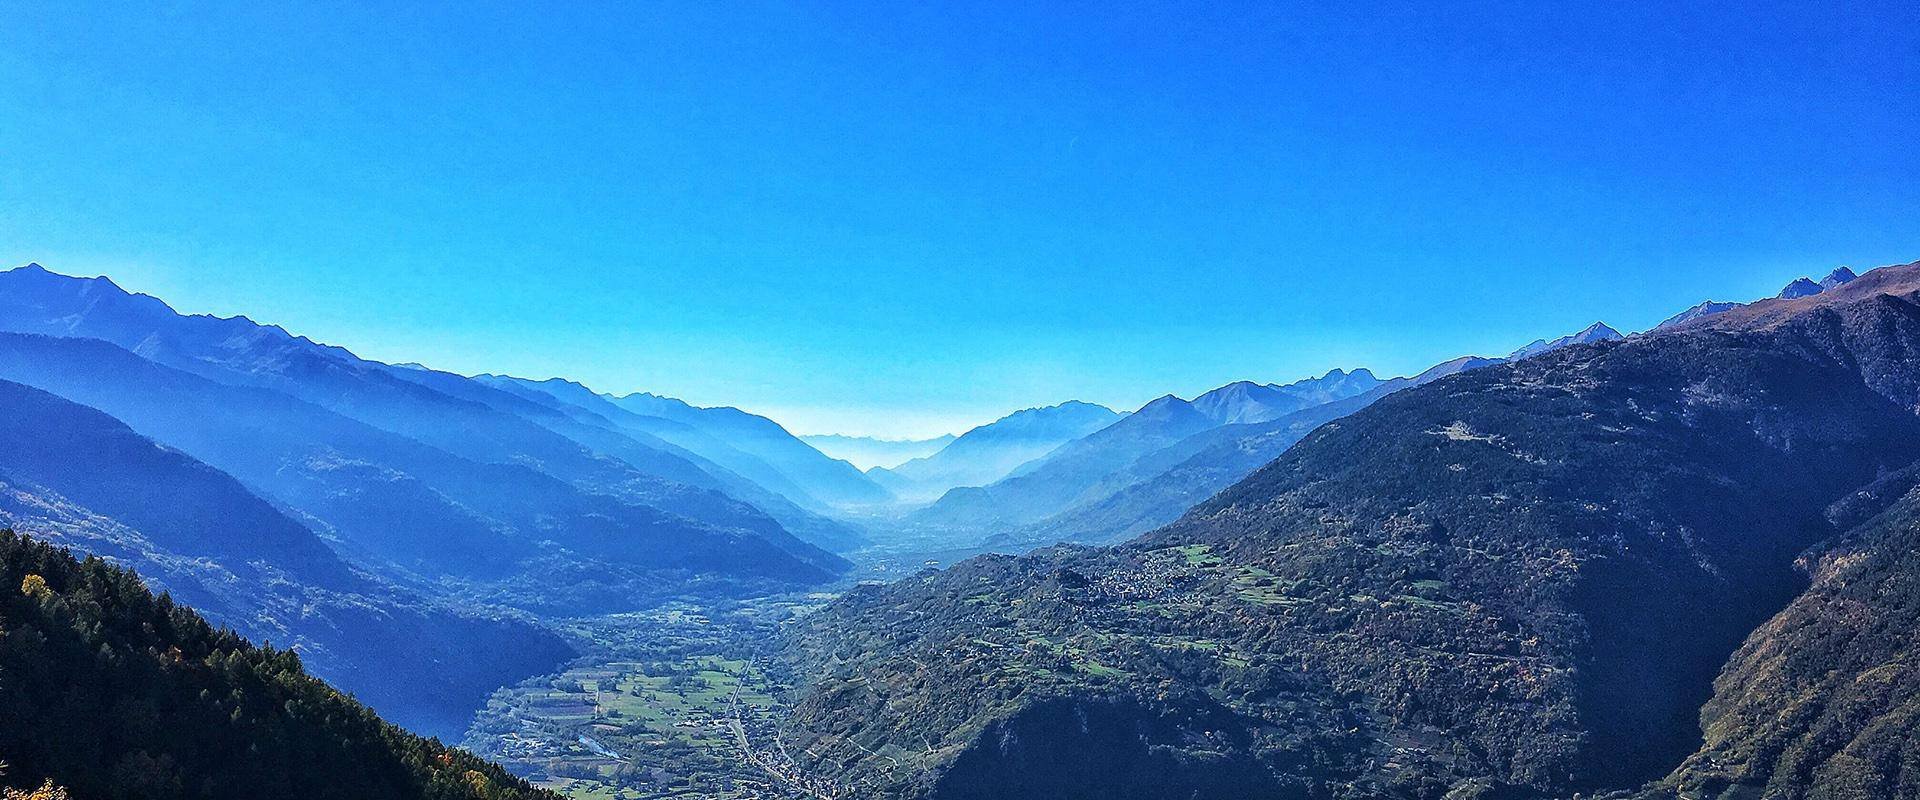 Na volta se diseva... 02 Novembre 2020: Foto della Valtellina